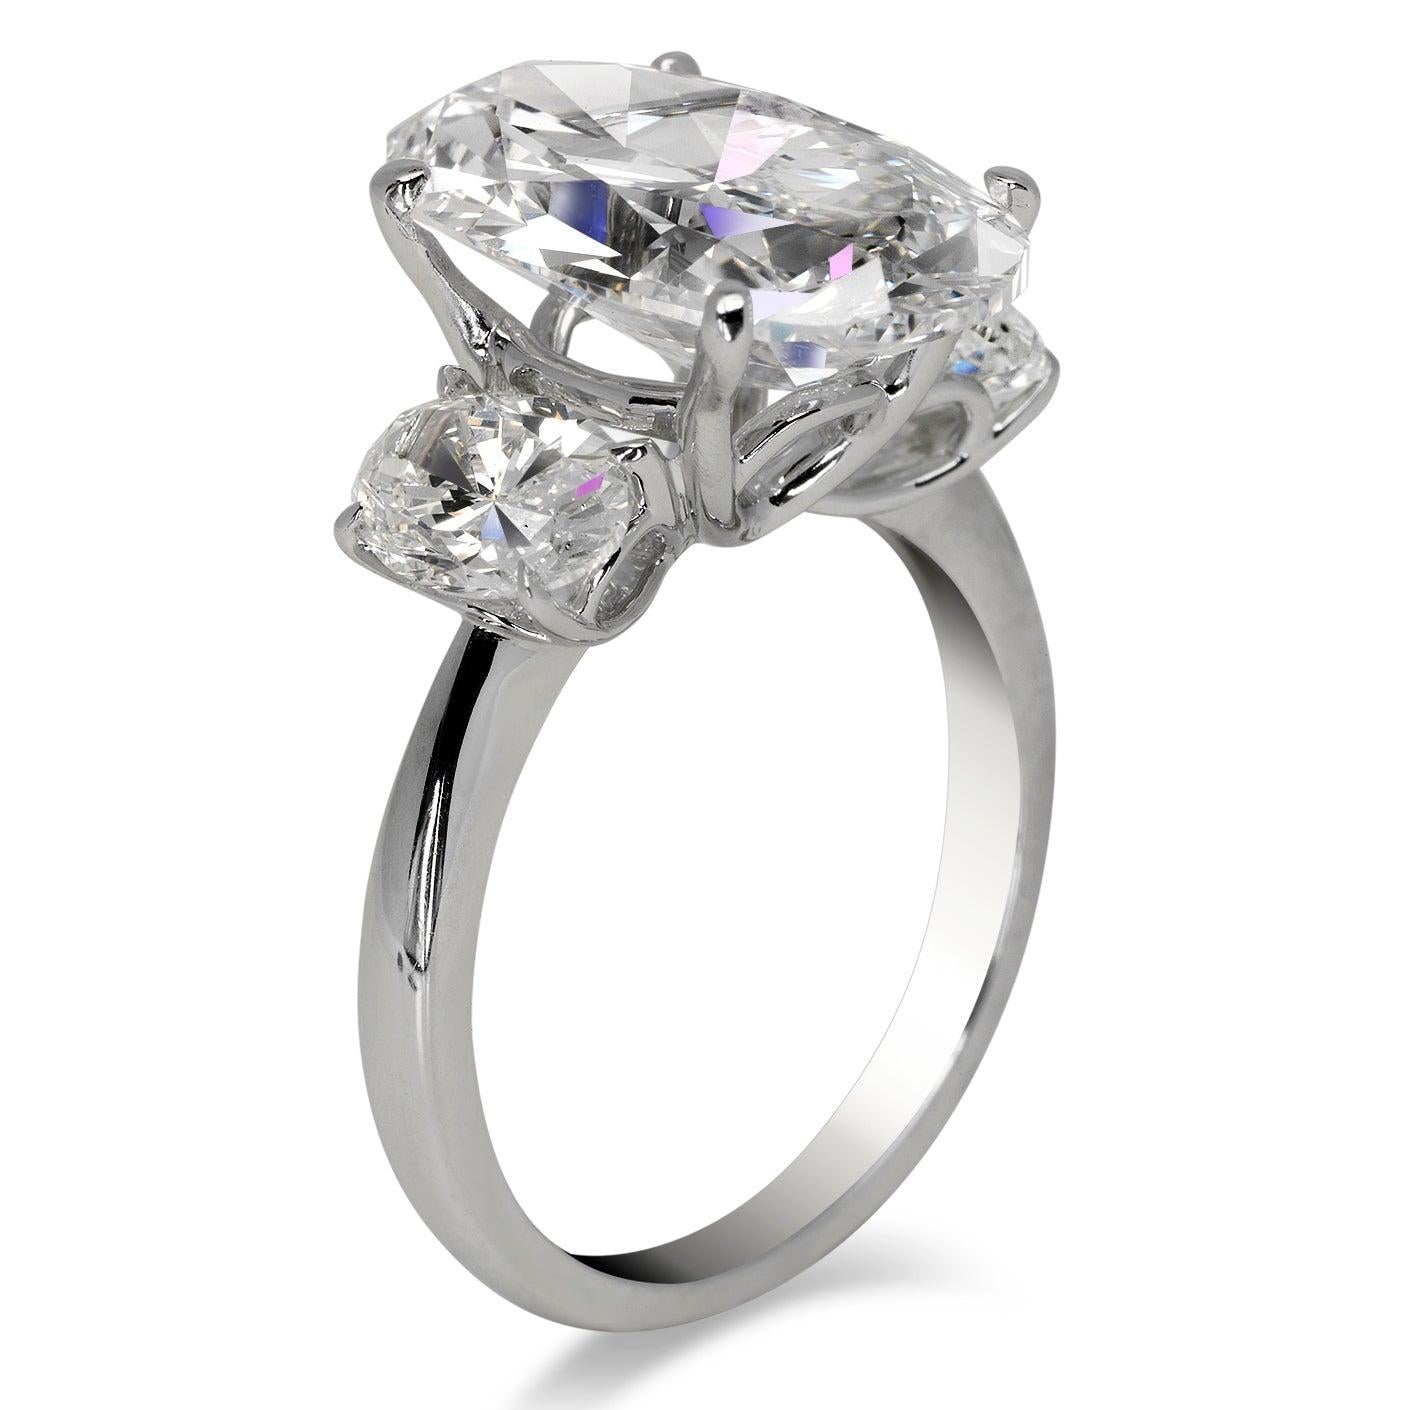 8 carat oval diamond ring price